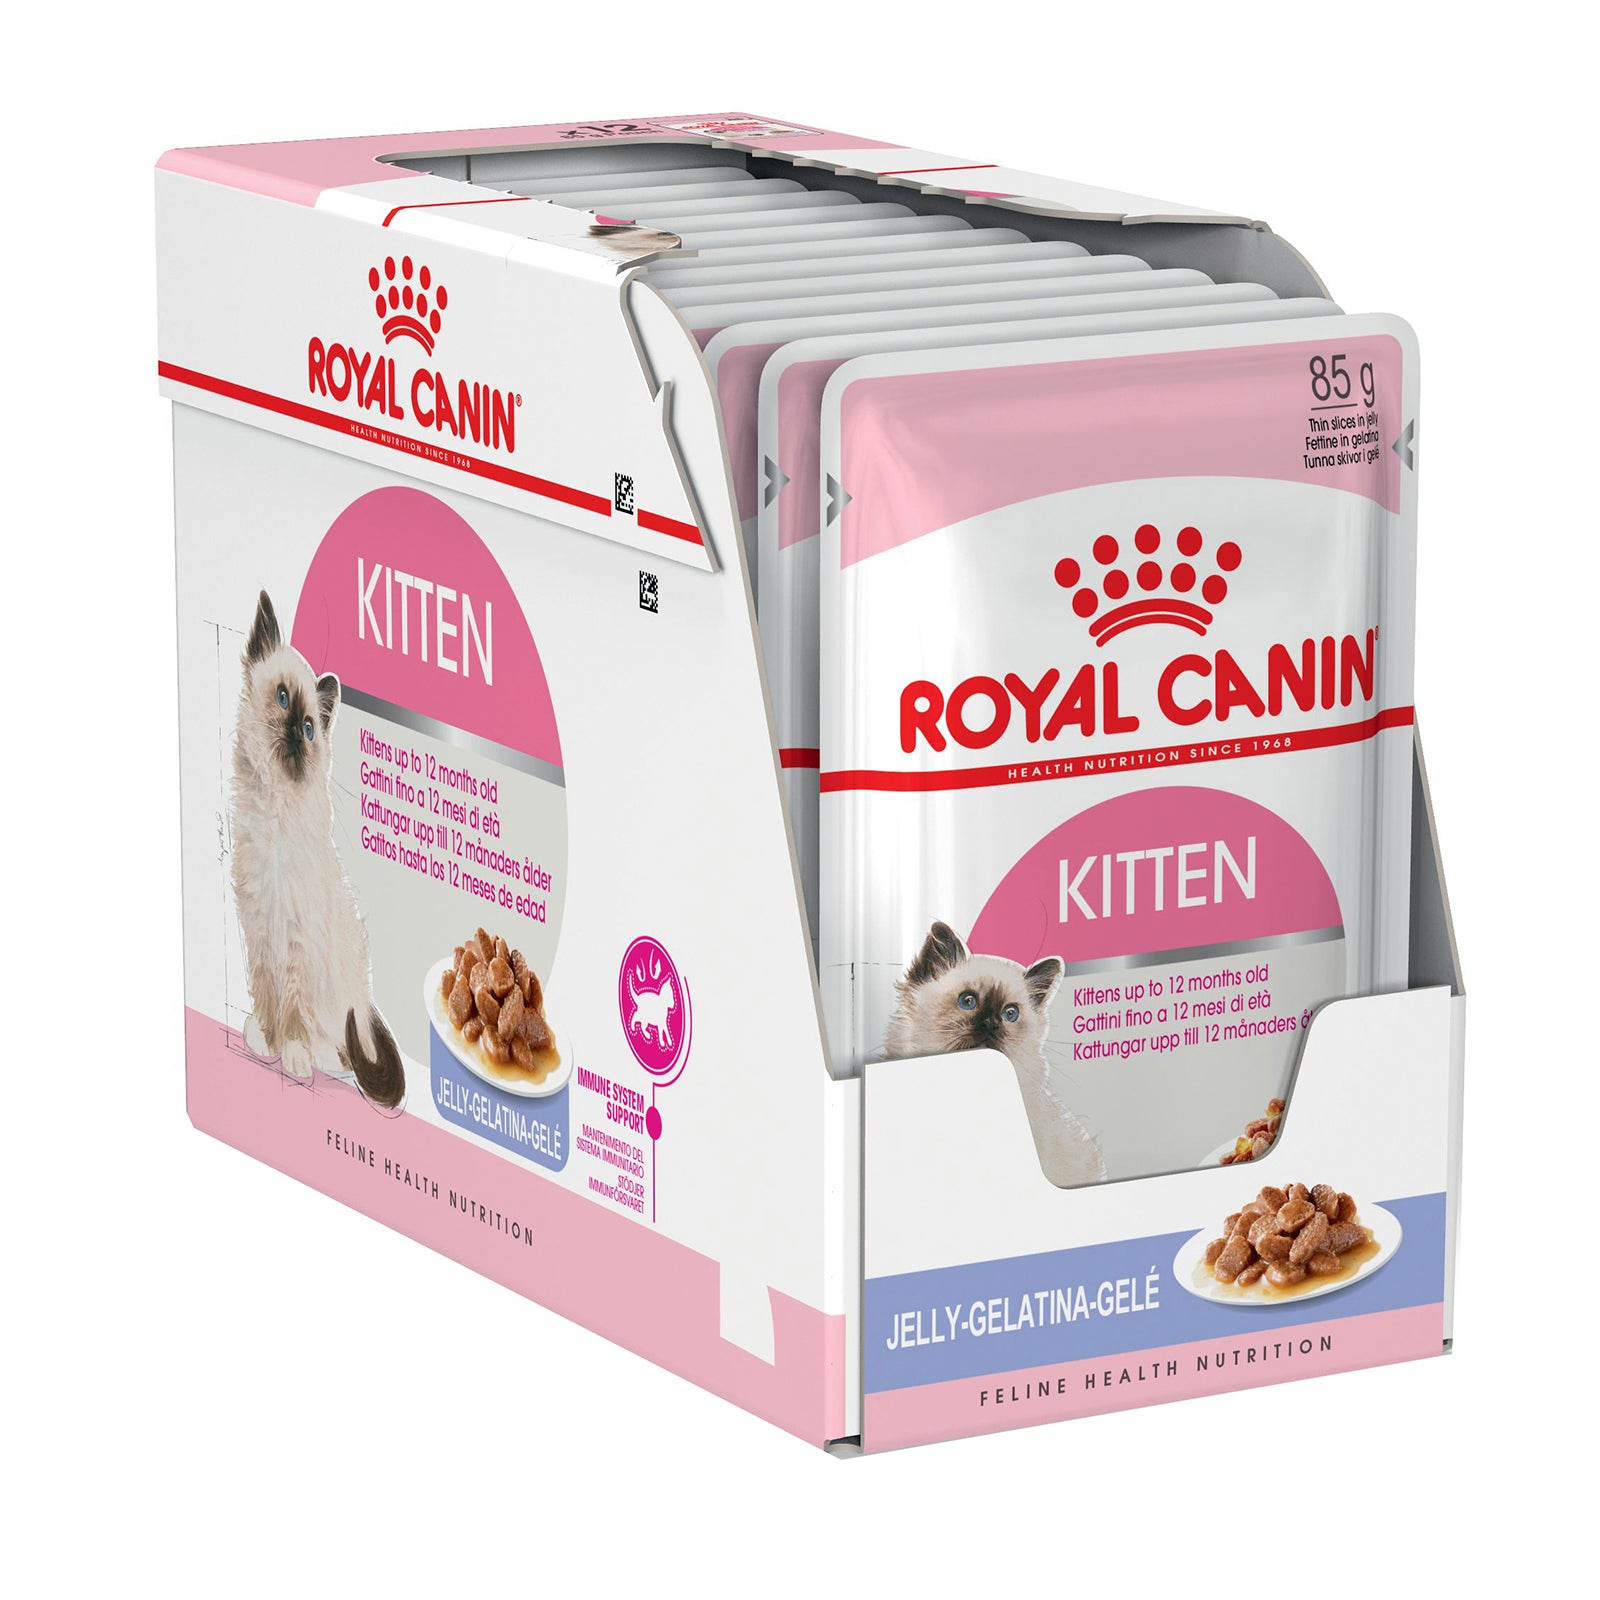 Royal Canin Cat Food Pouch Kitten in Jelly